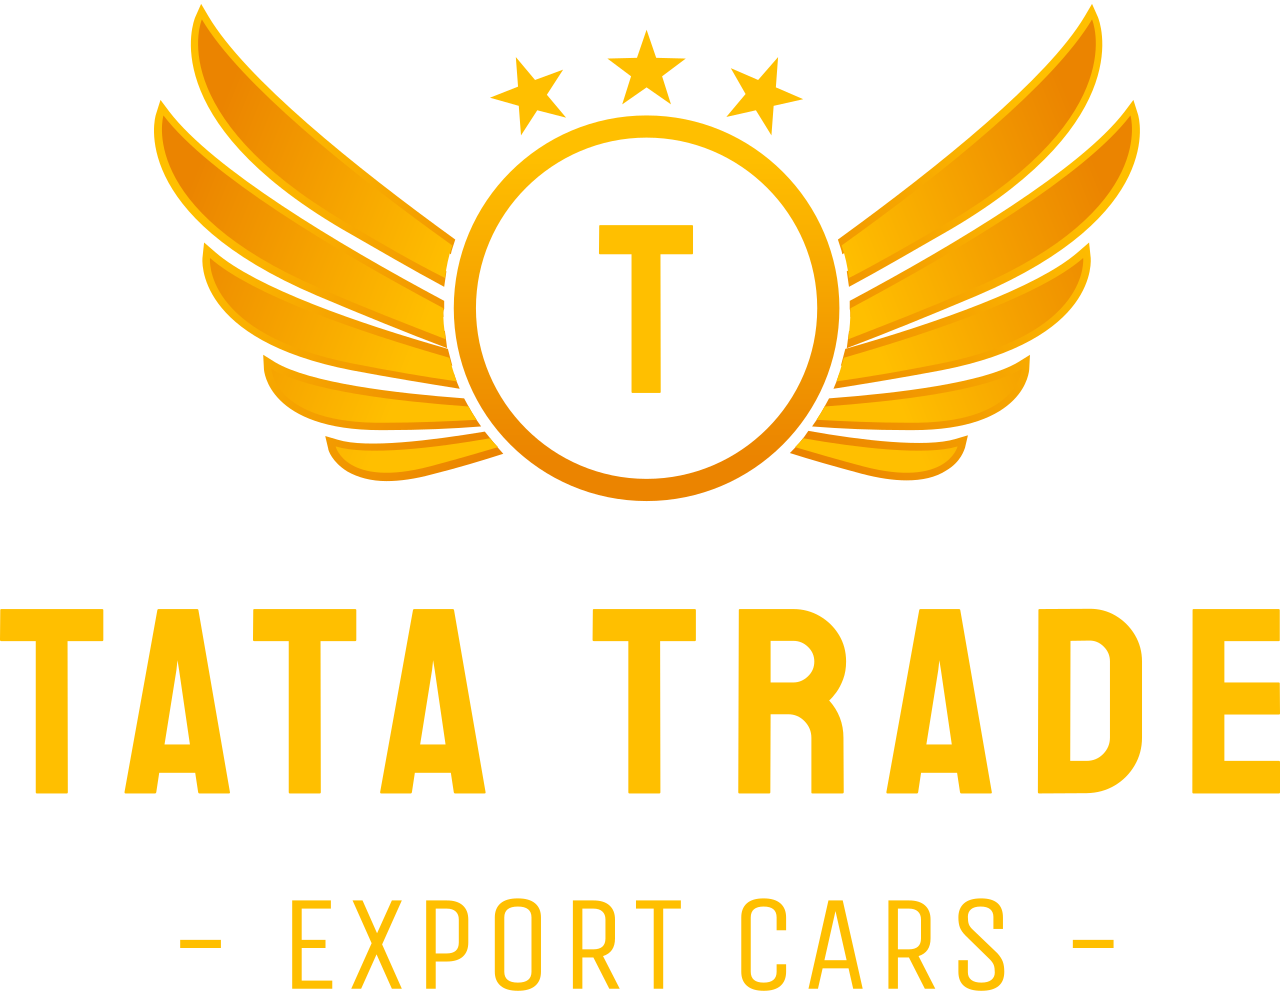 Tata Trade's web page